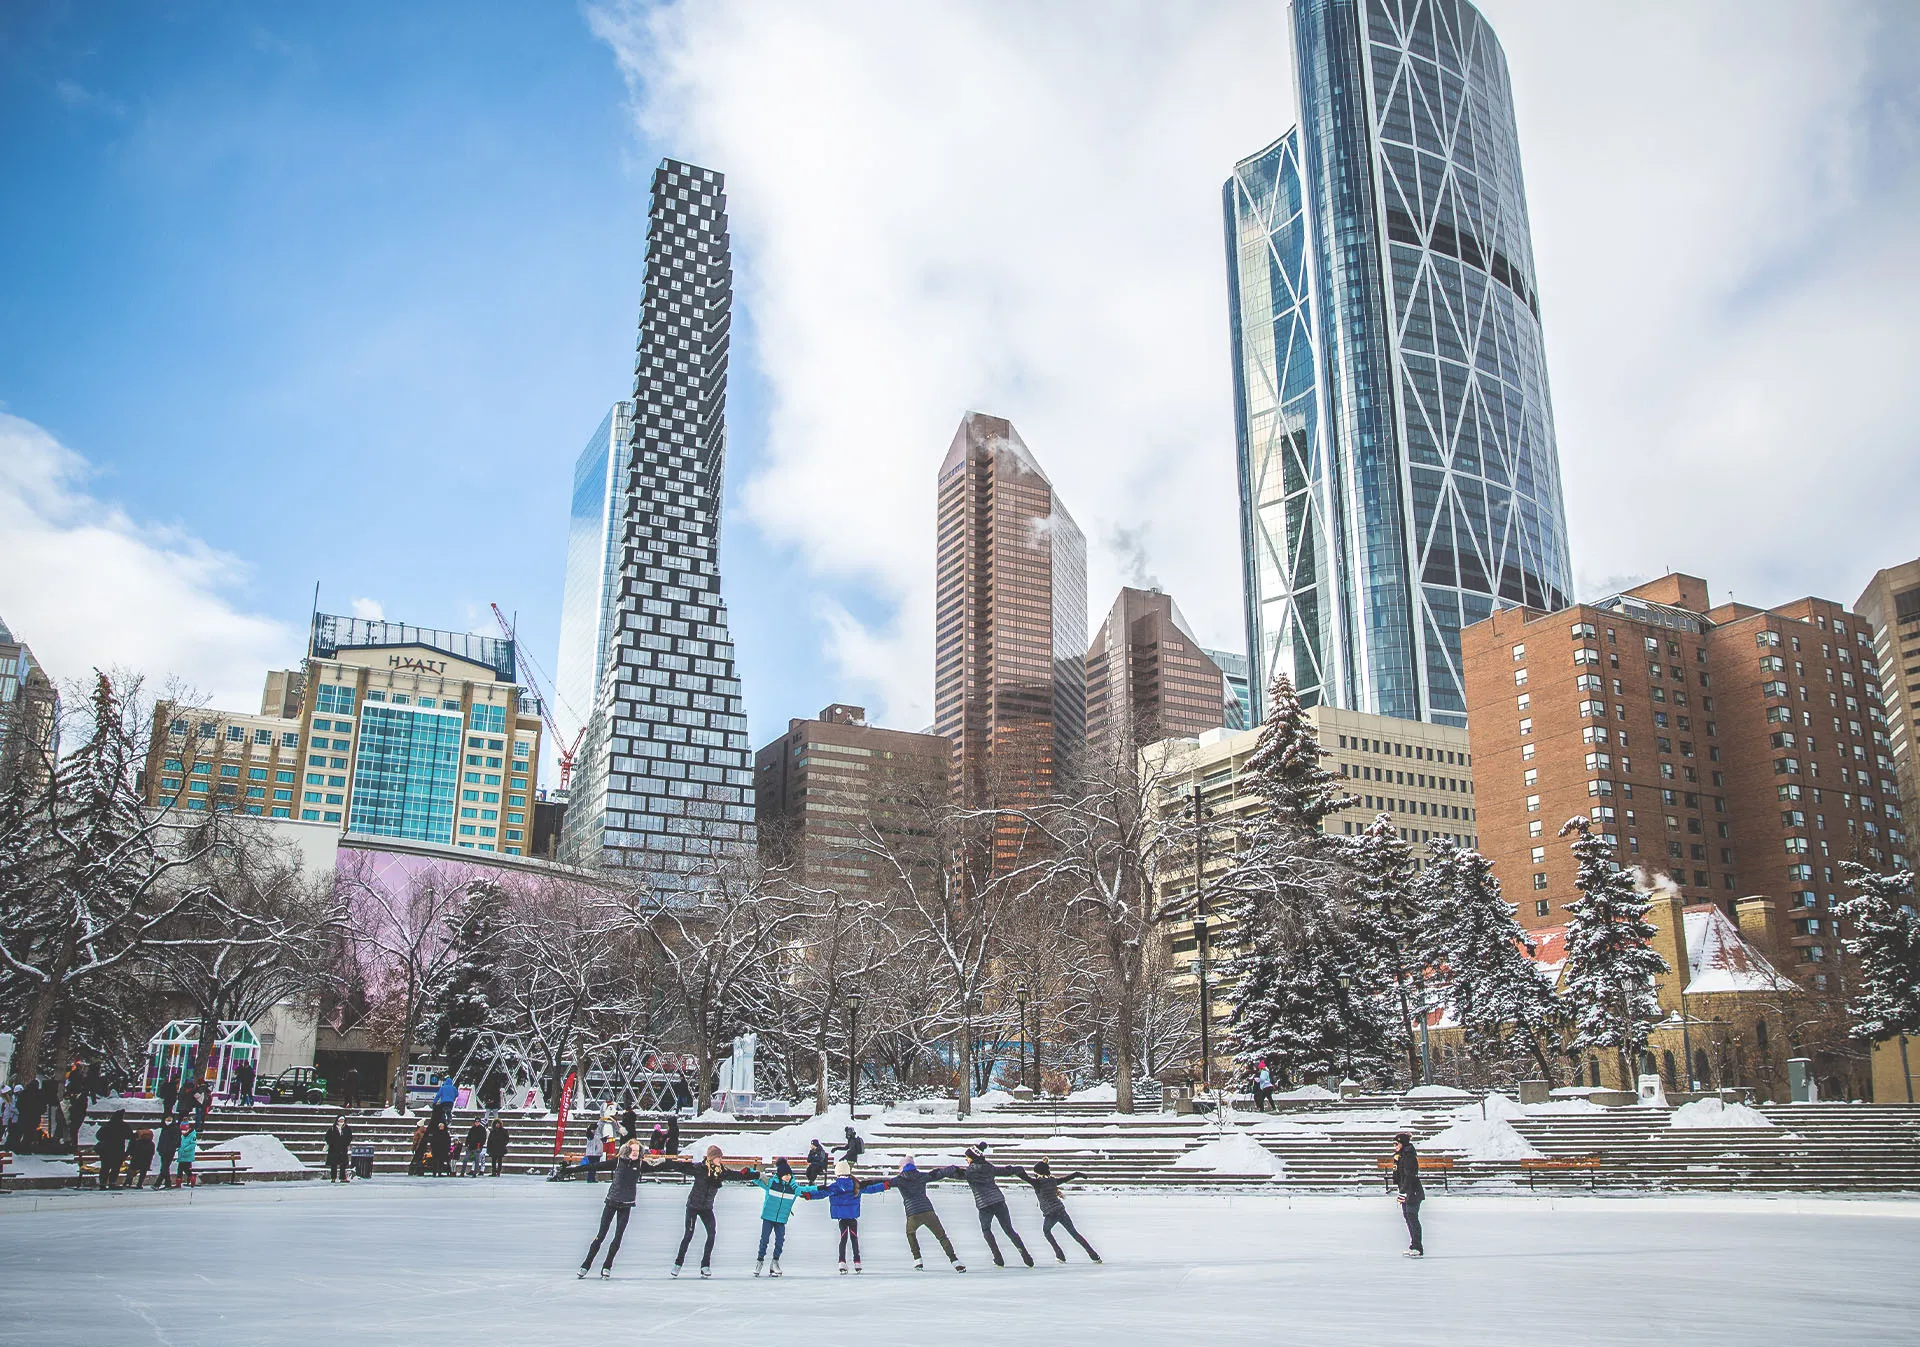 Ice skating at Olympic Plaza in Calgary 